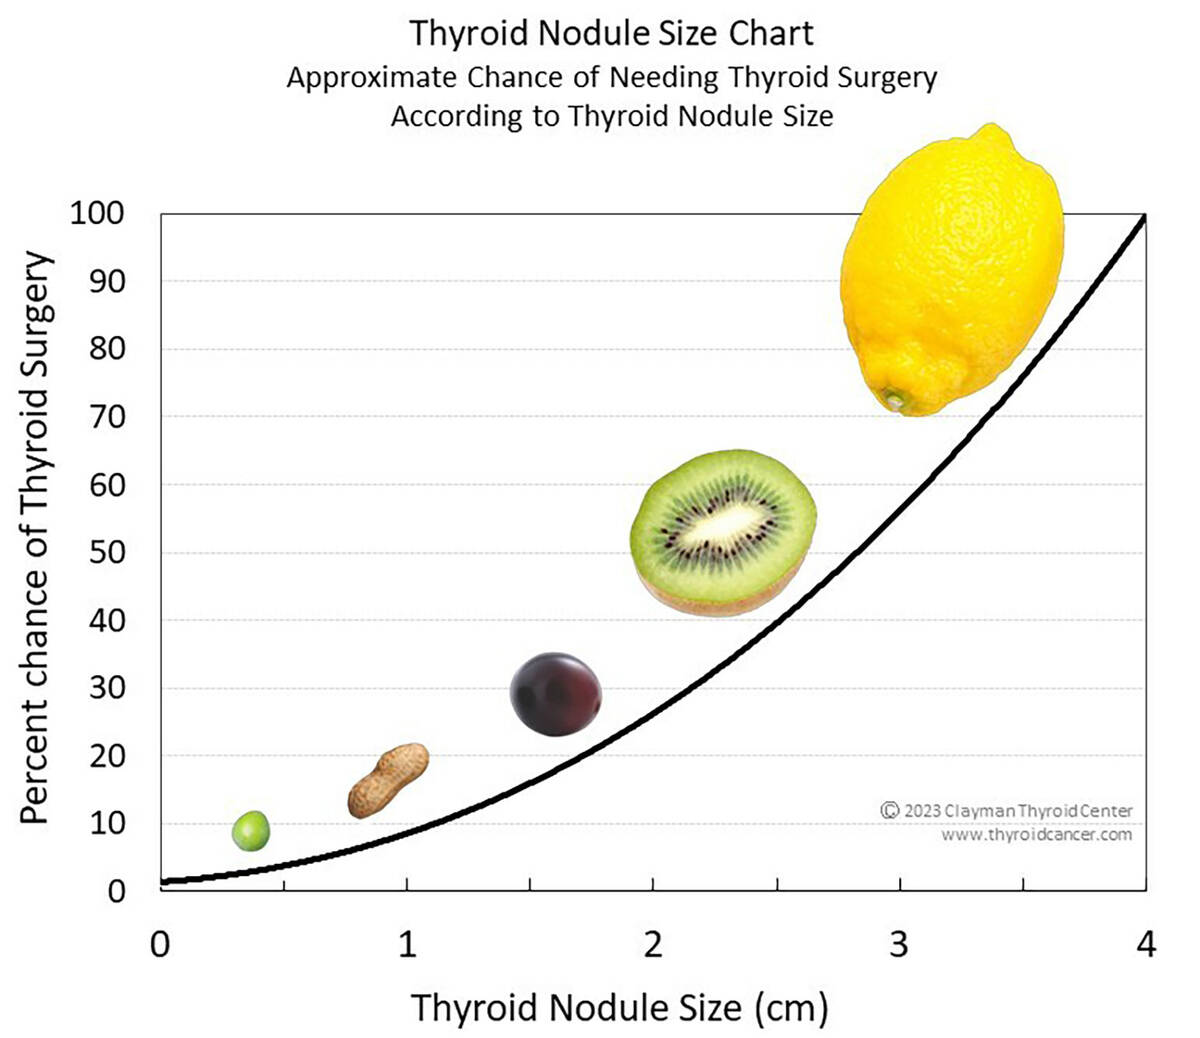 Thyroid nodule size chart showing likelihood for surgery based on thyroid nodule size.